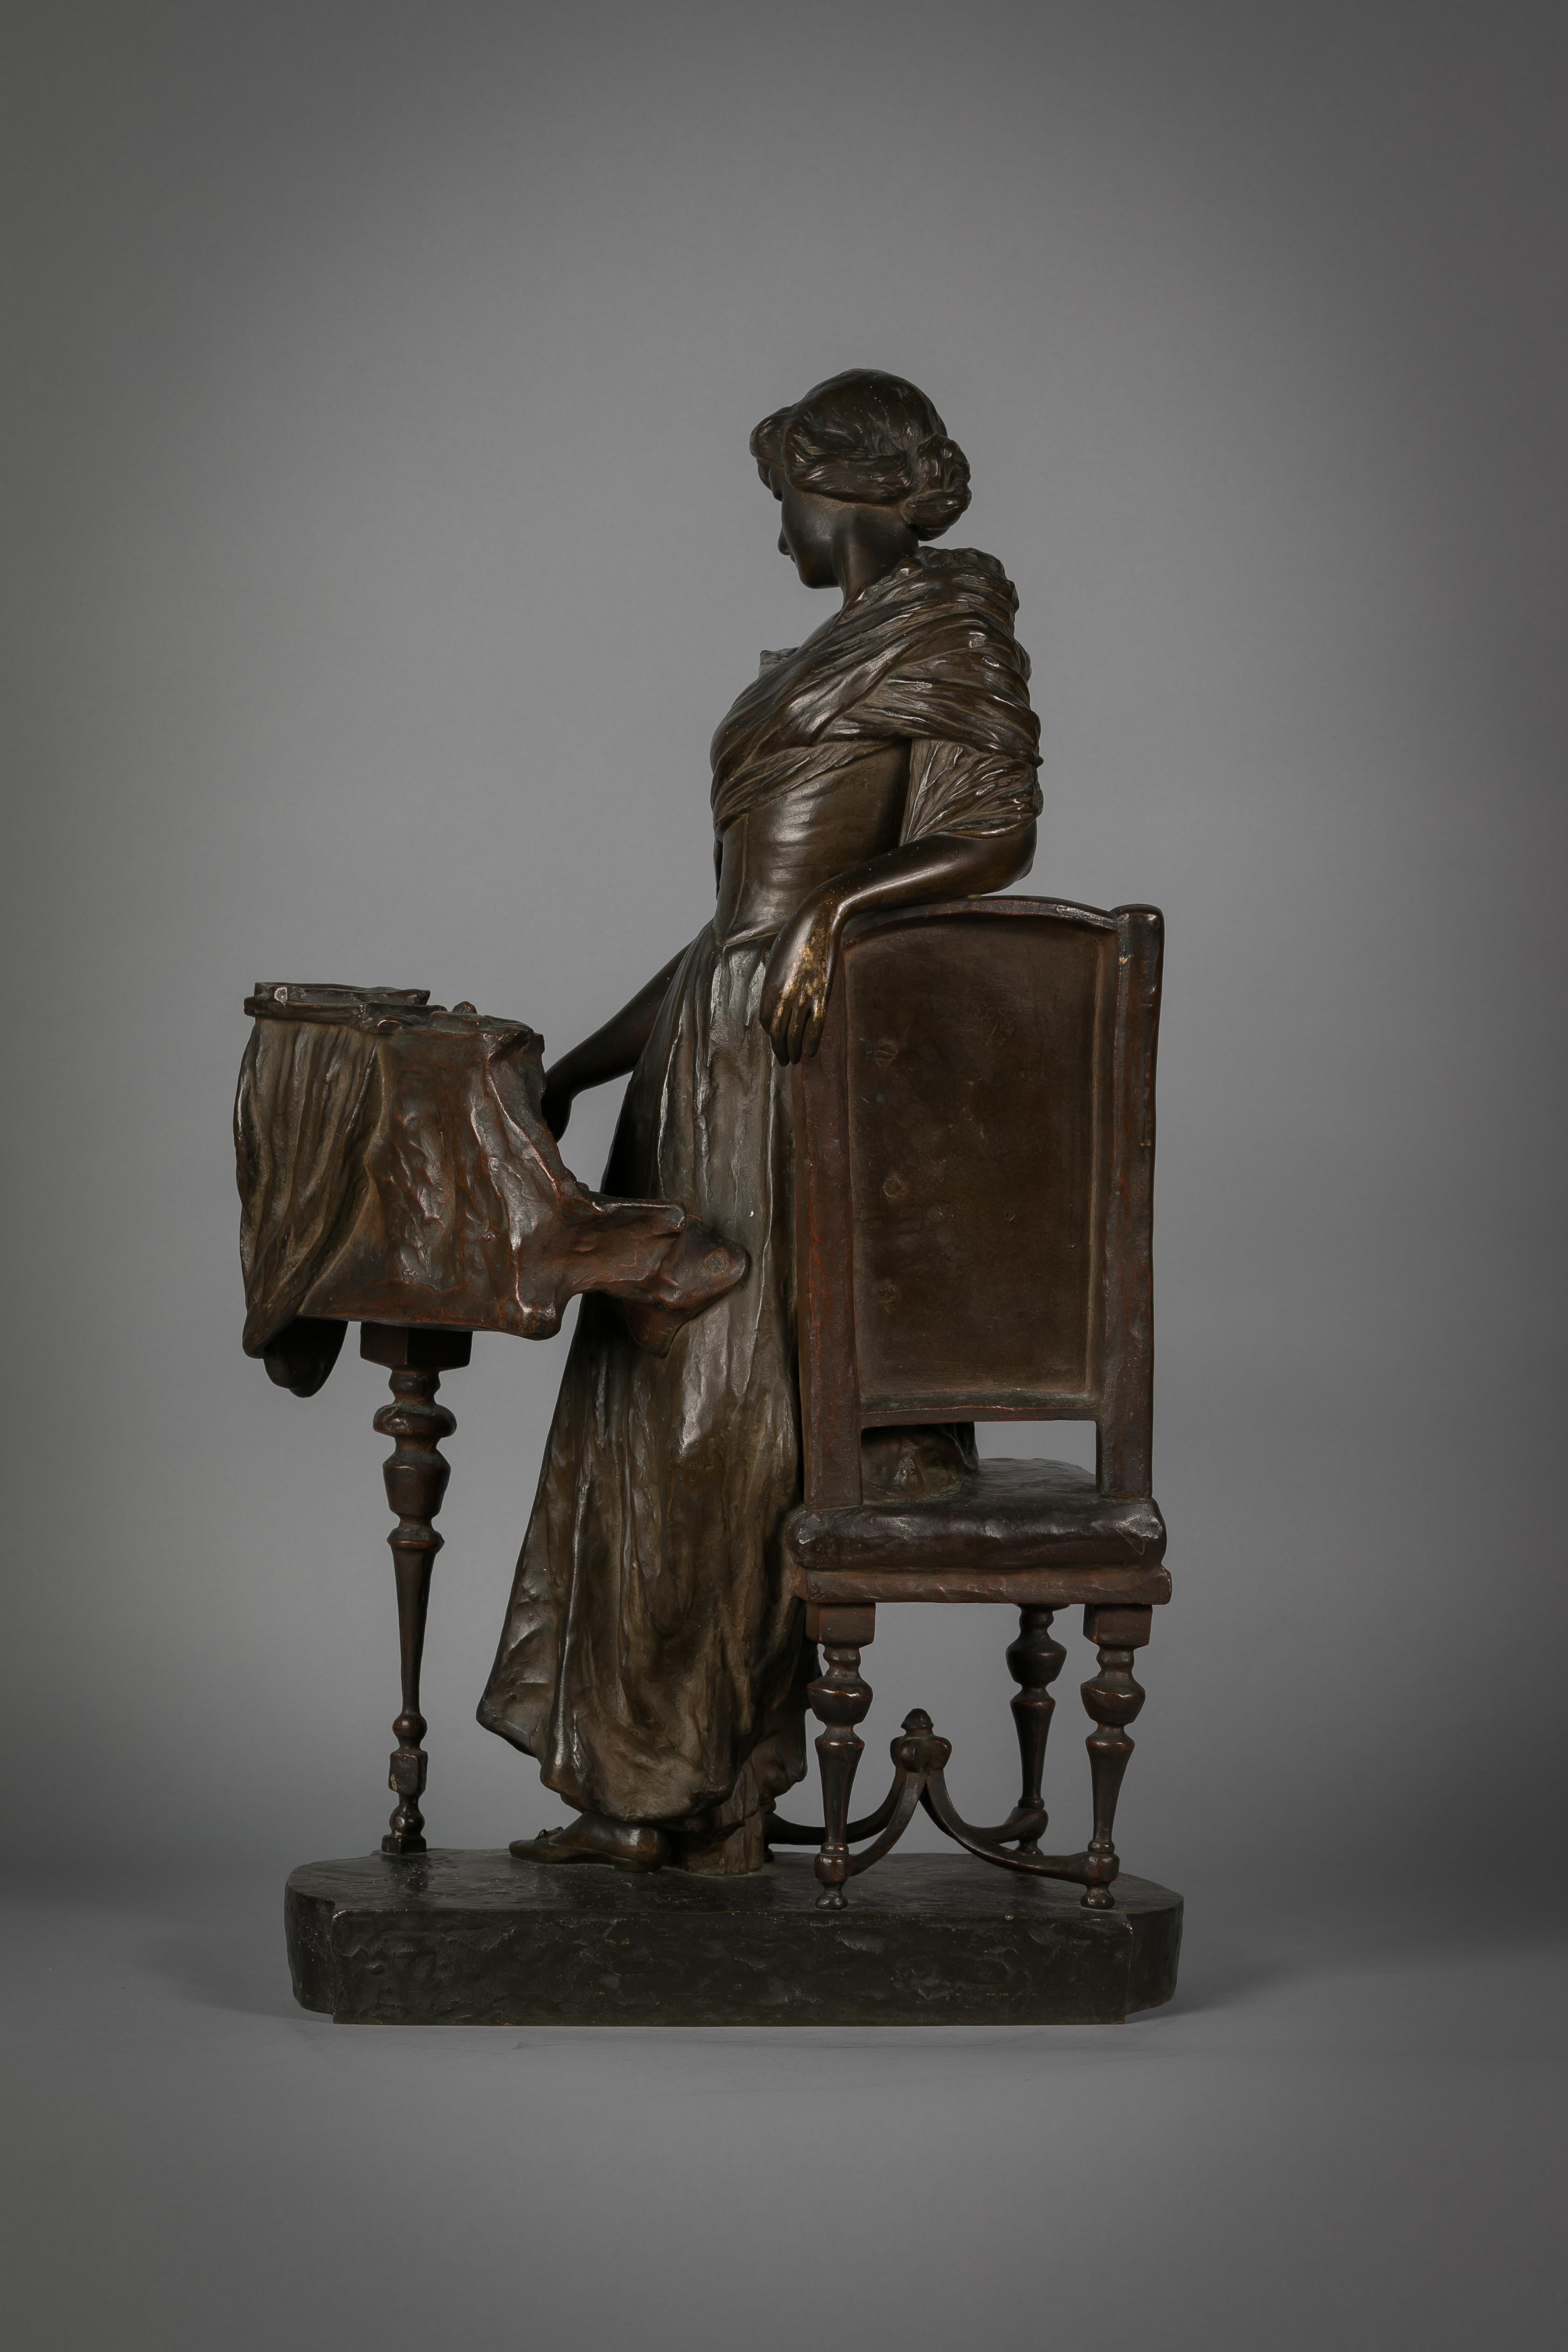 Italian bronze sculpture of woman playing a pianoforte, signed Saverid Sortini (1860-1925).